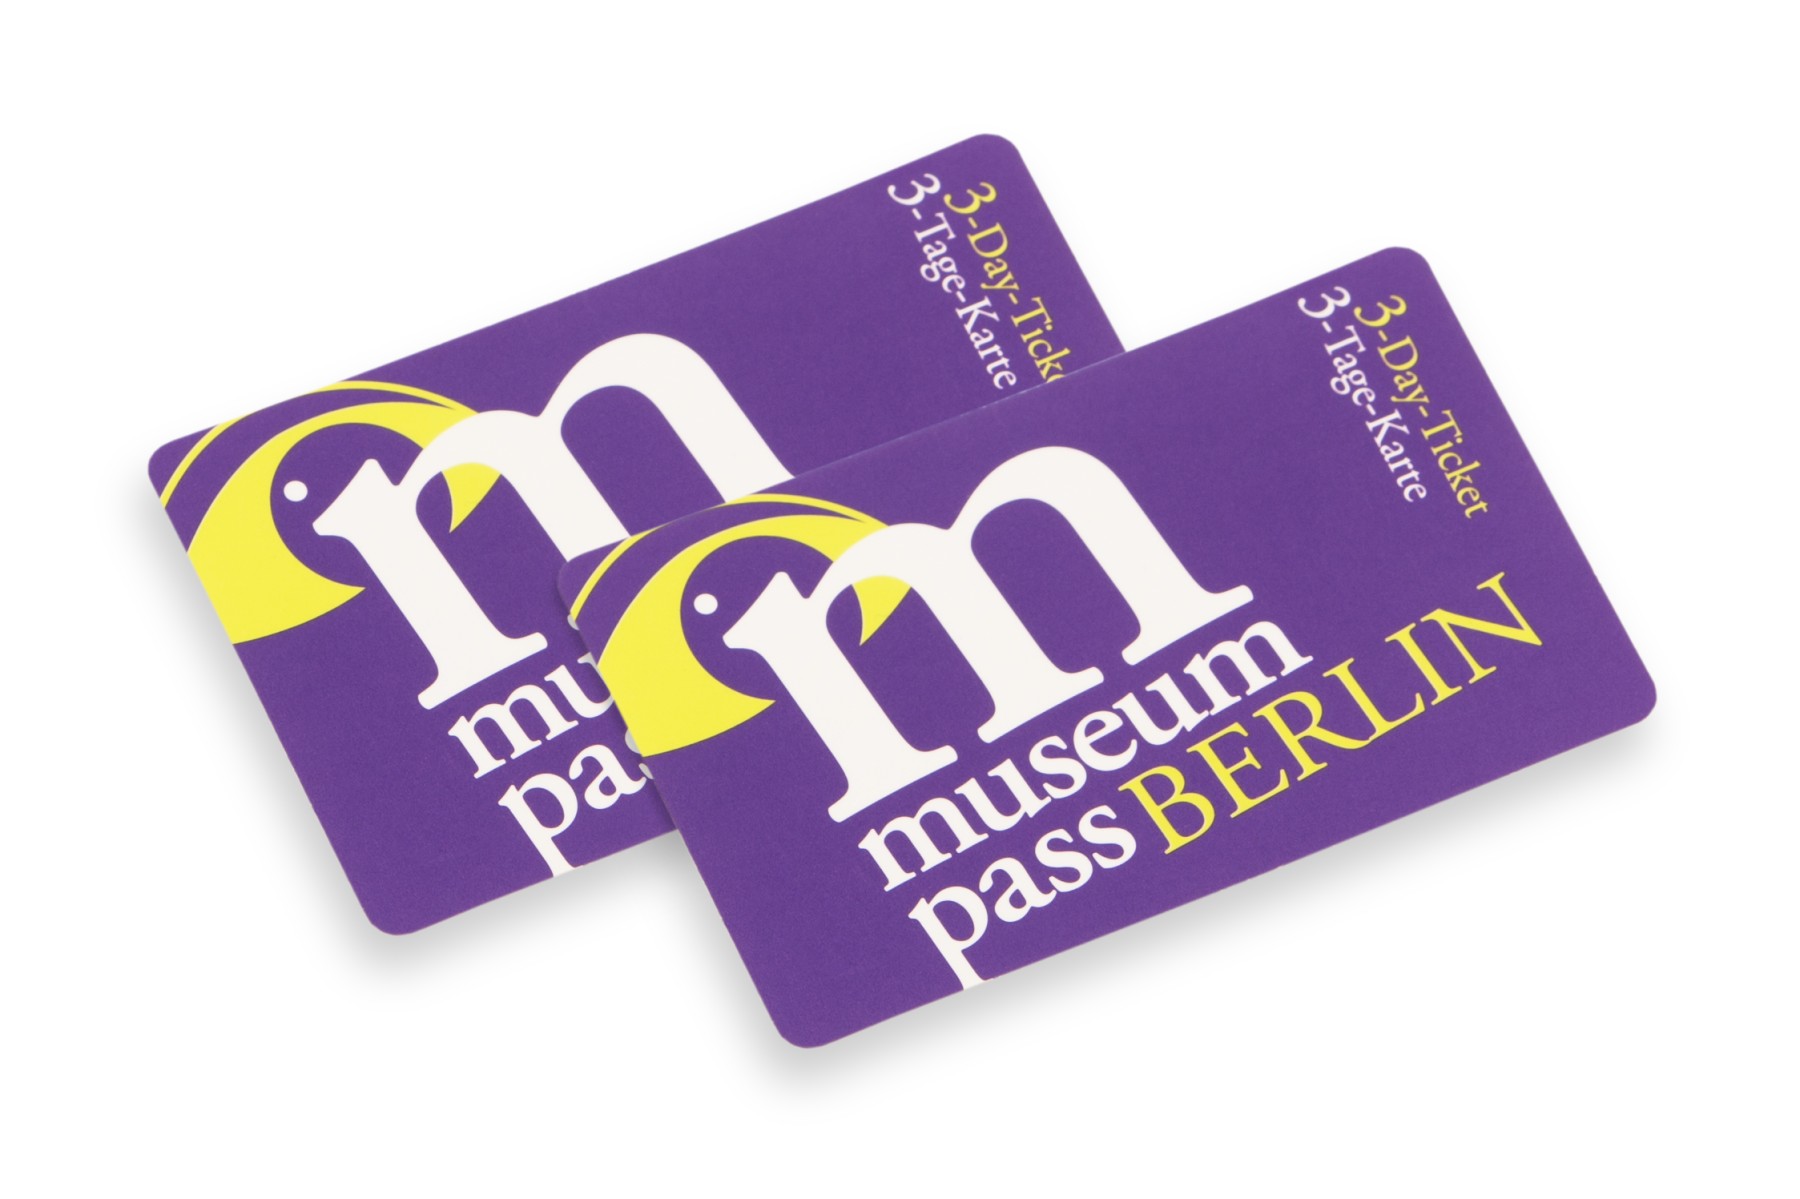 visit berlin museum pass